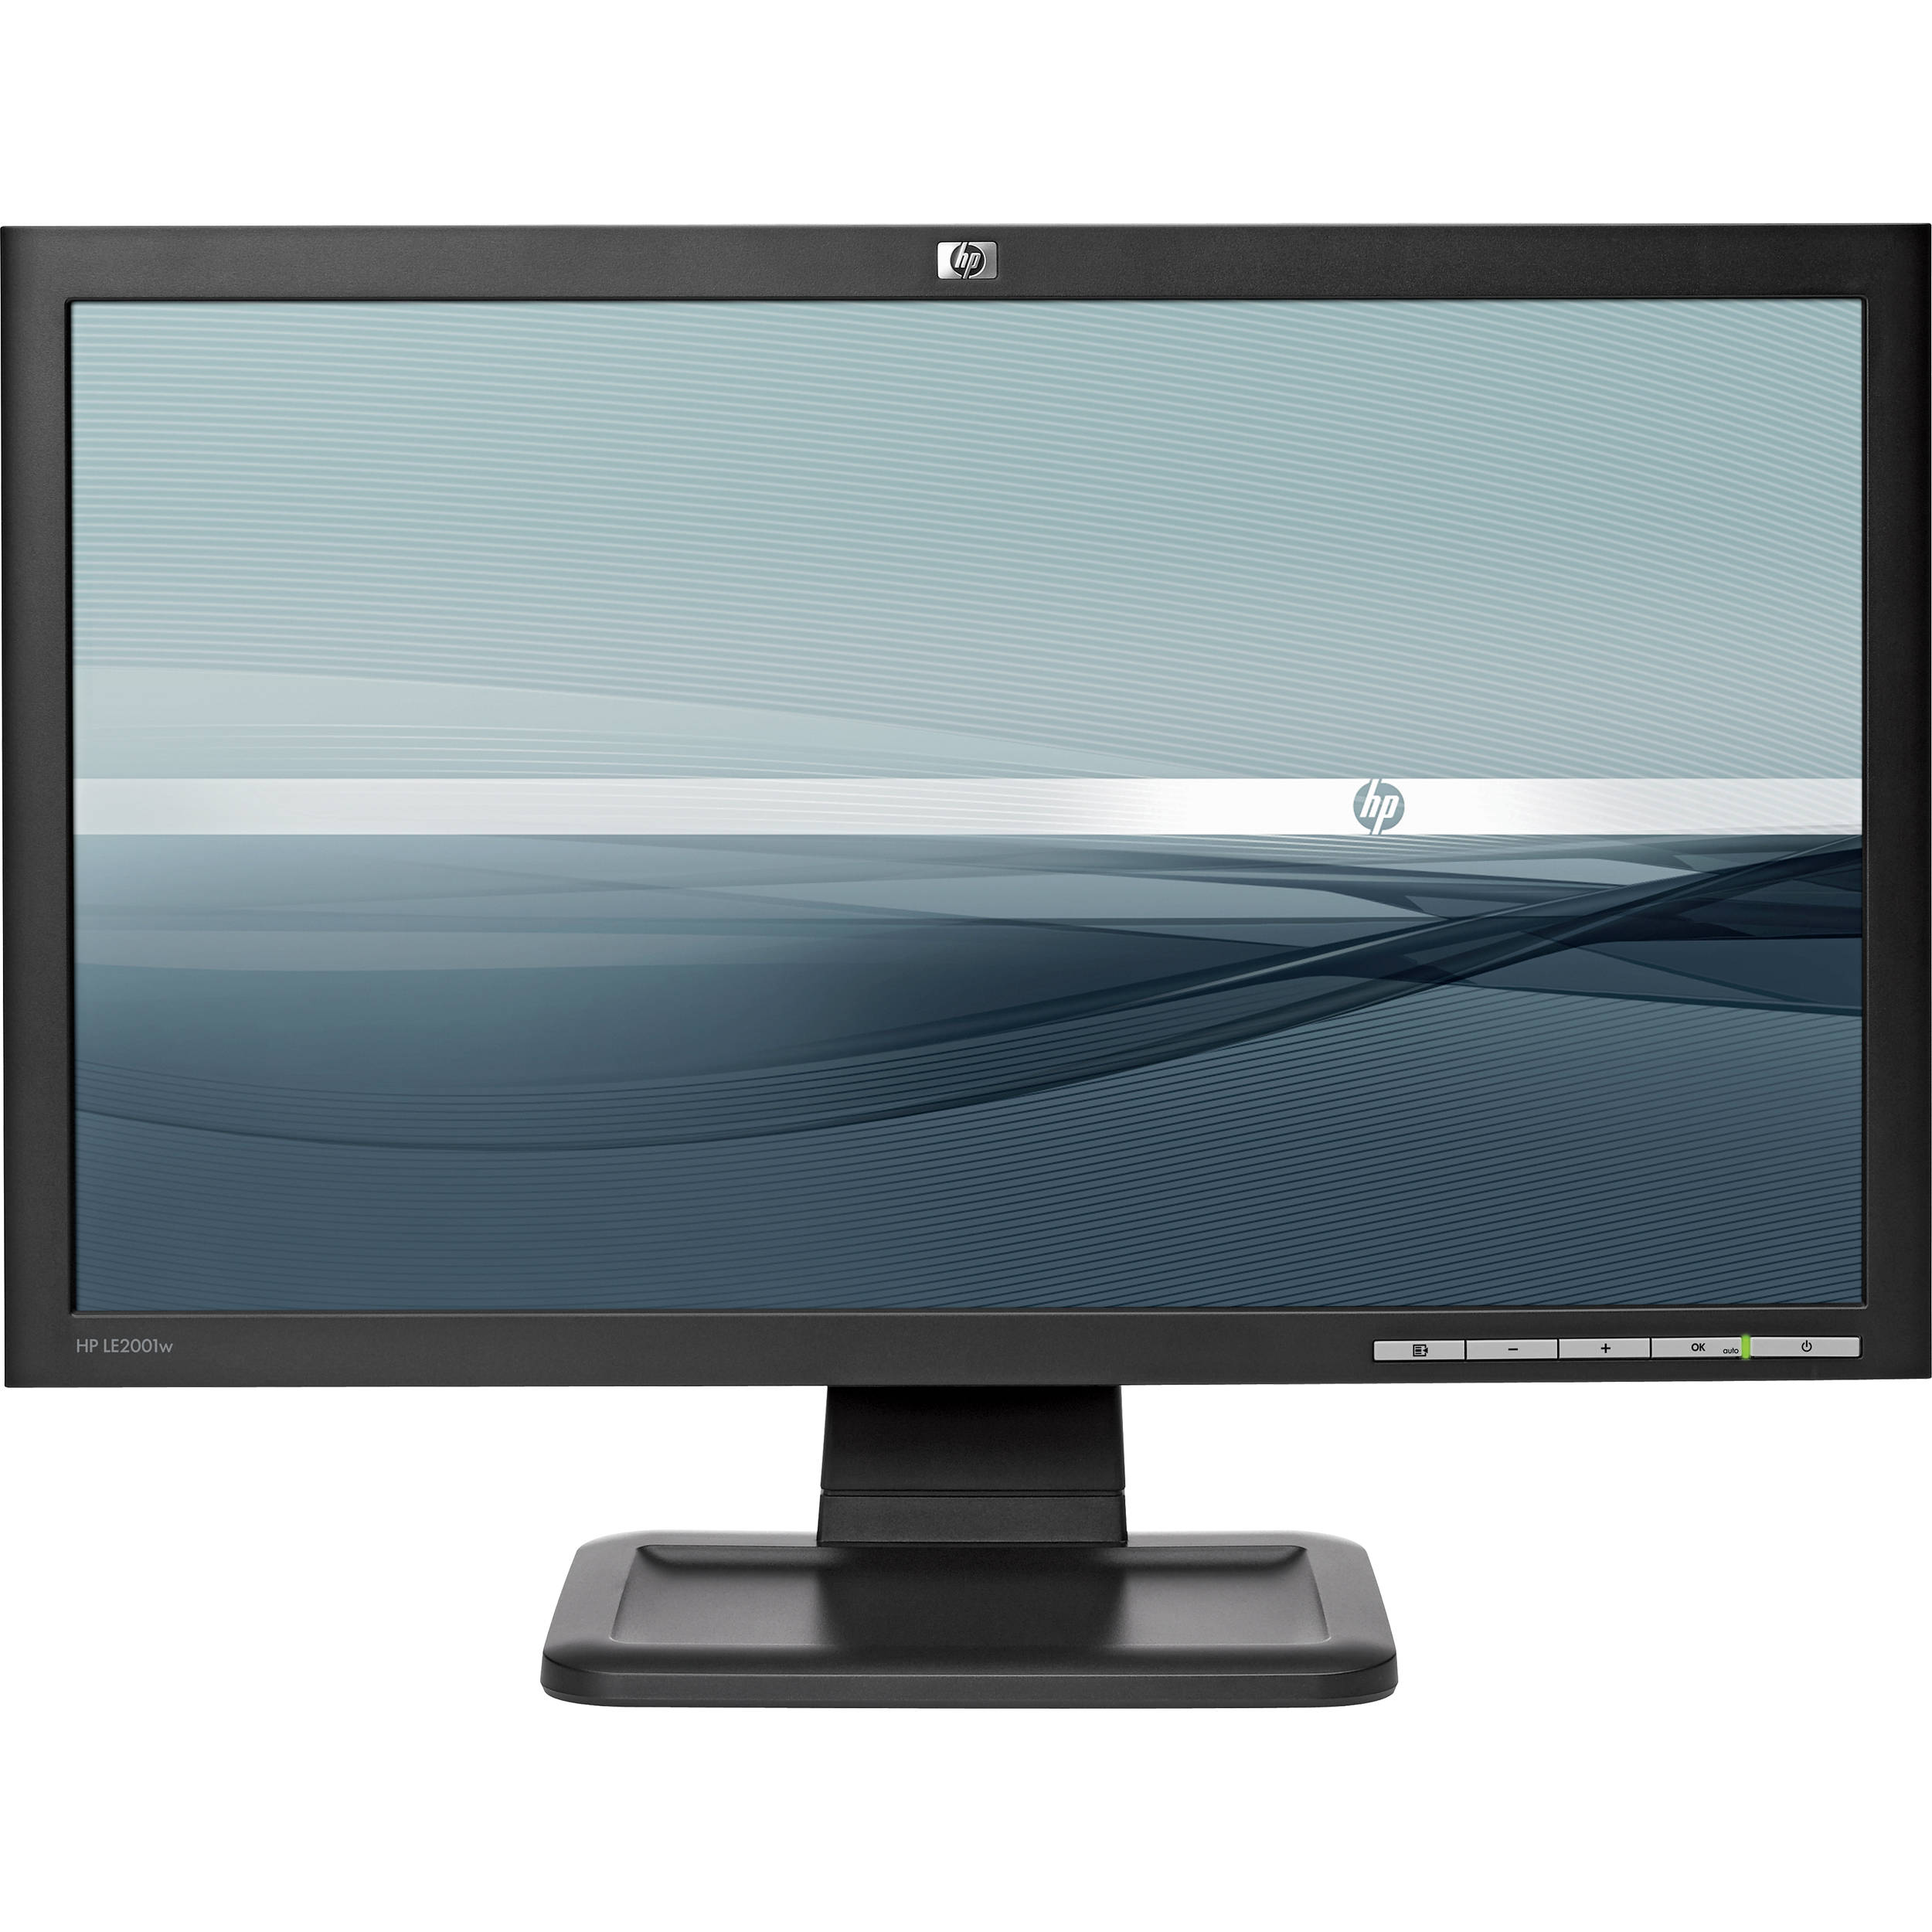 Monitor HP LE2001W, 20 Inch LCD, 1600 x 900, VGA